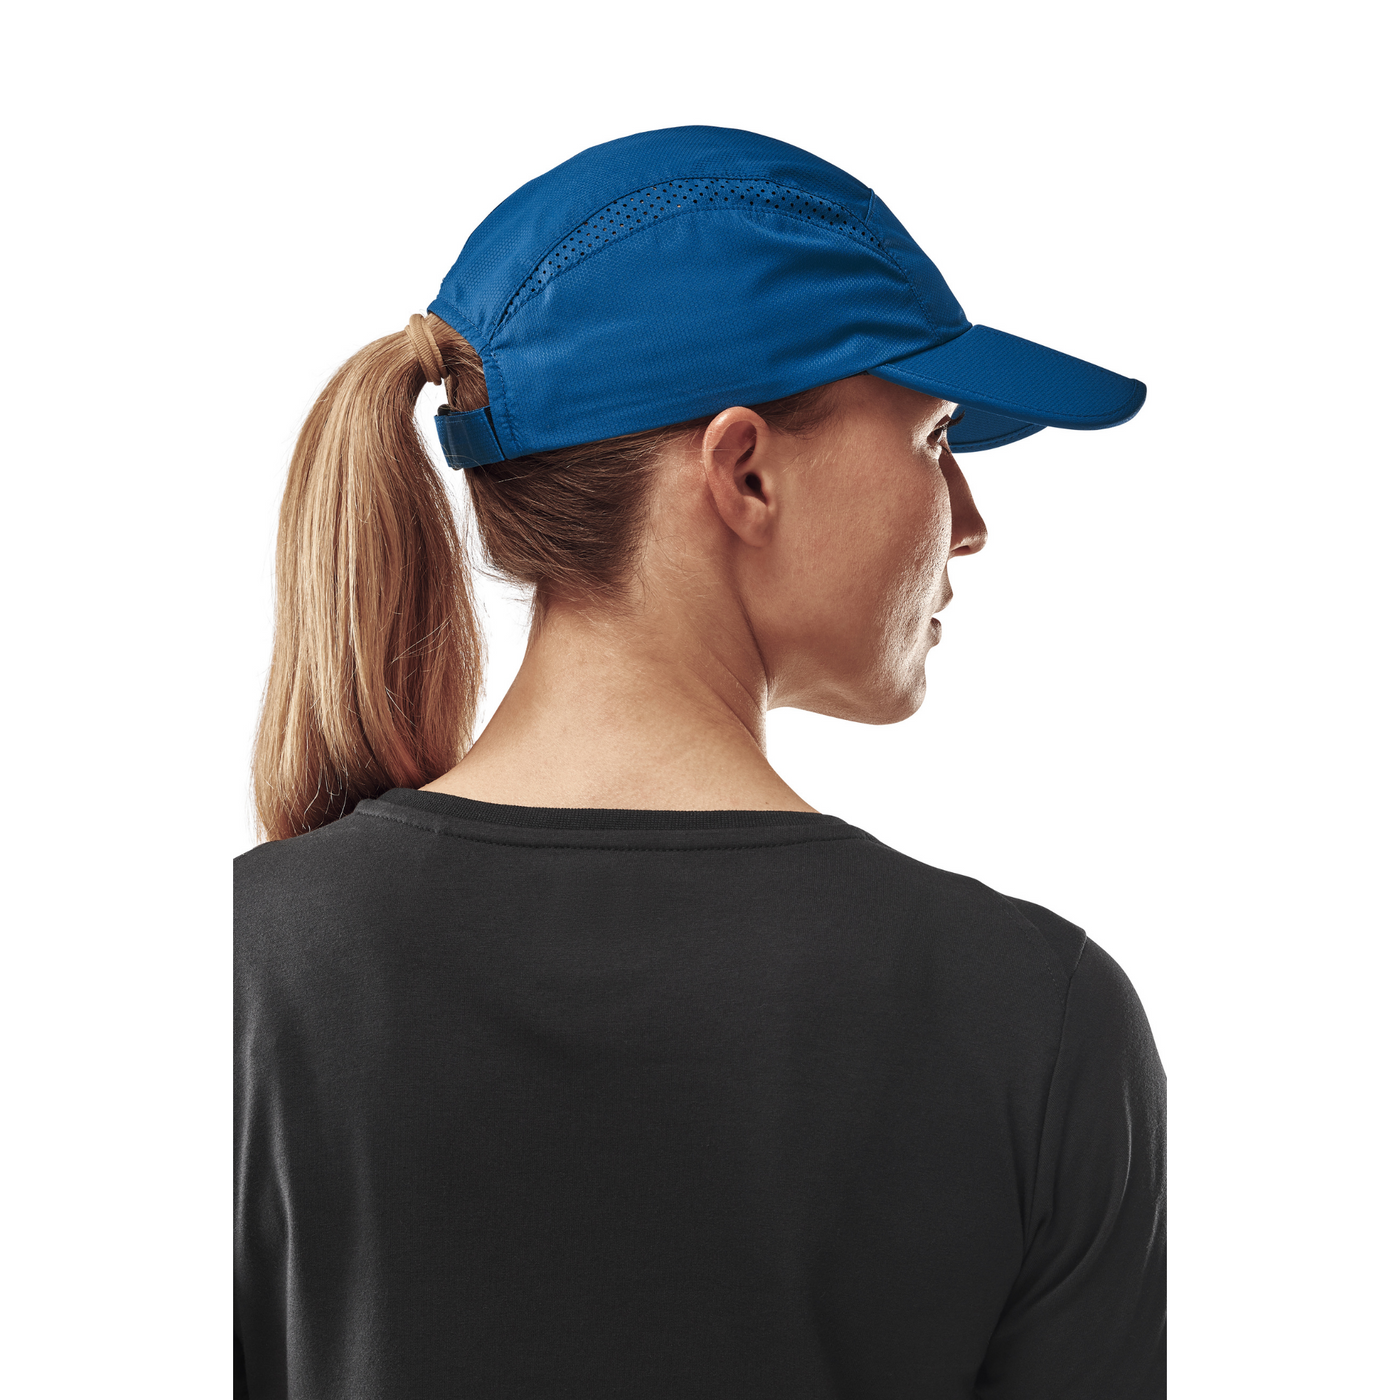 Run Cap, Blue, Back View Model, Women